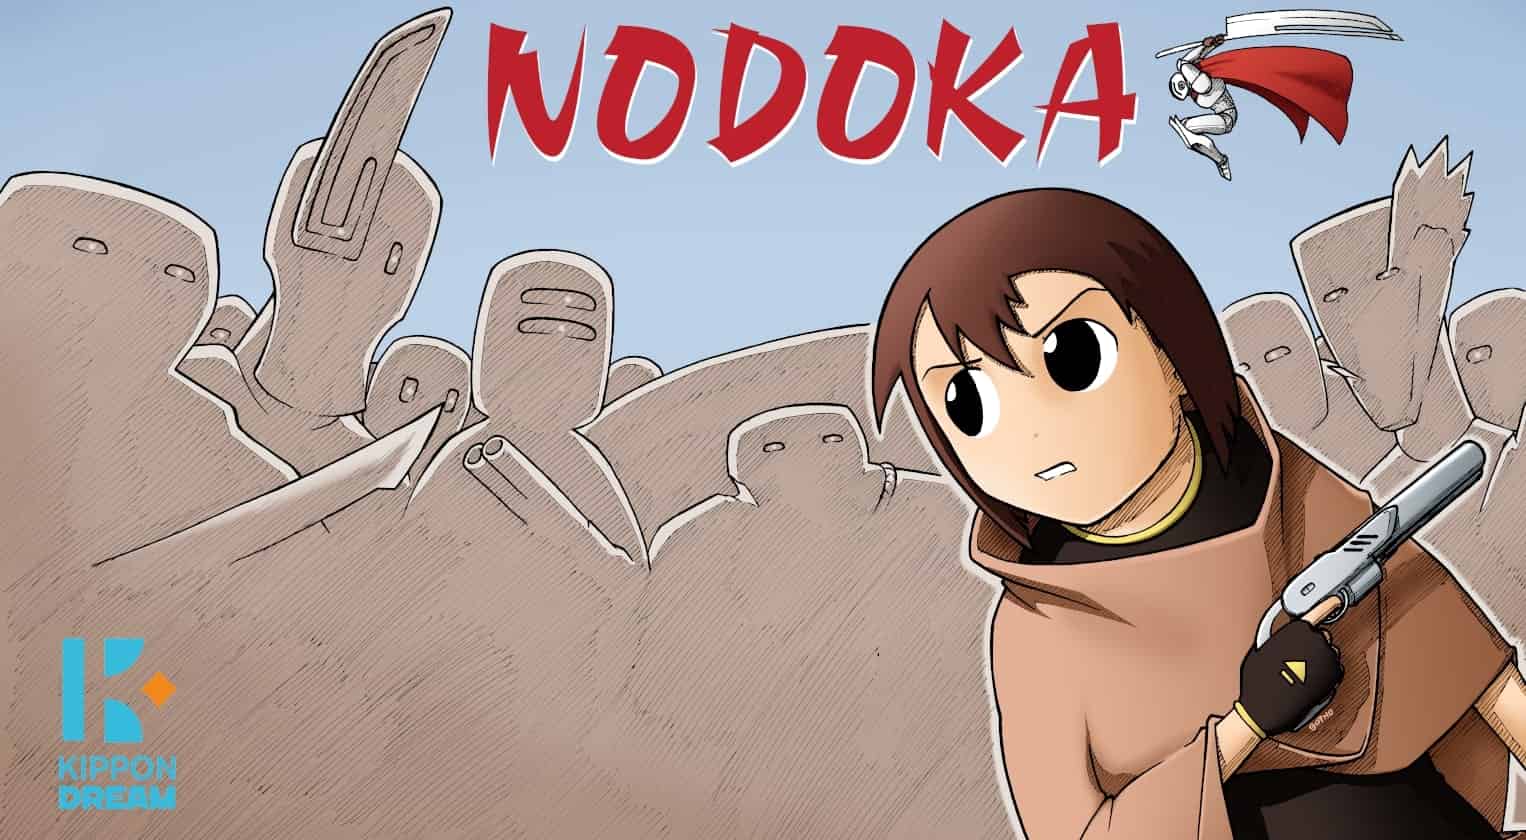 Nodoka - Scan manga gratuit en ligne manga scan gratuit bayday